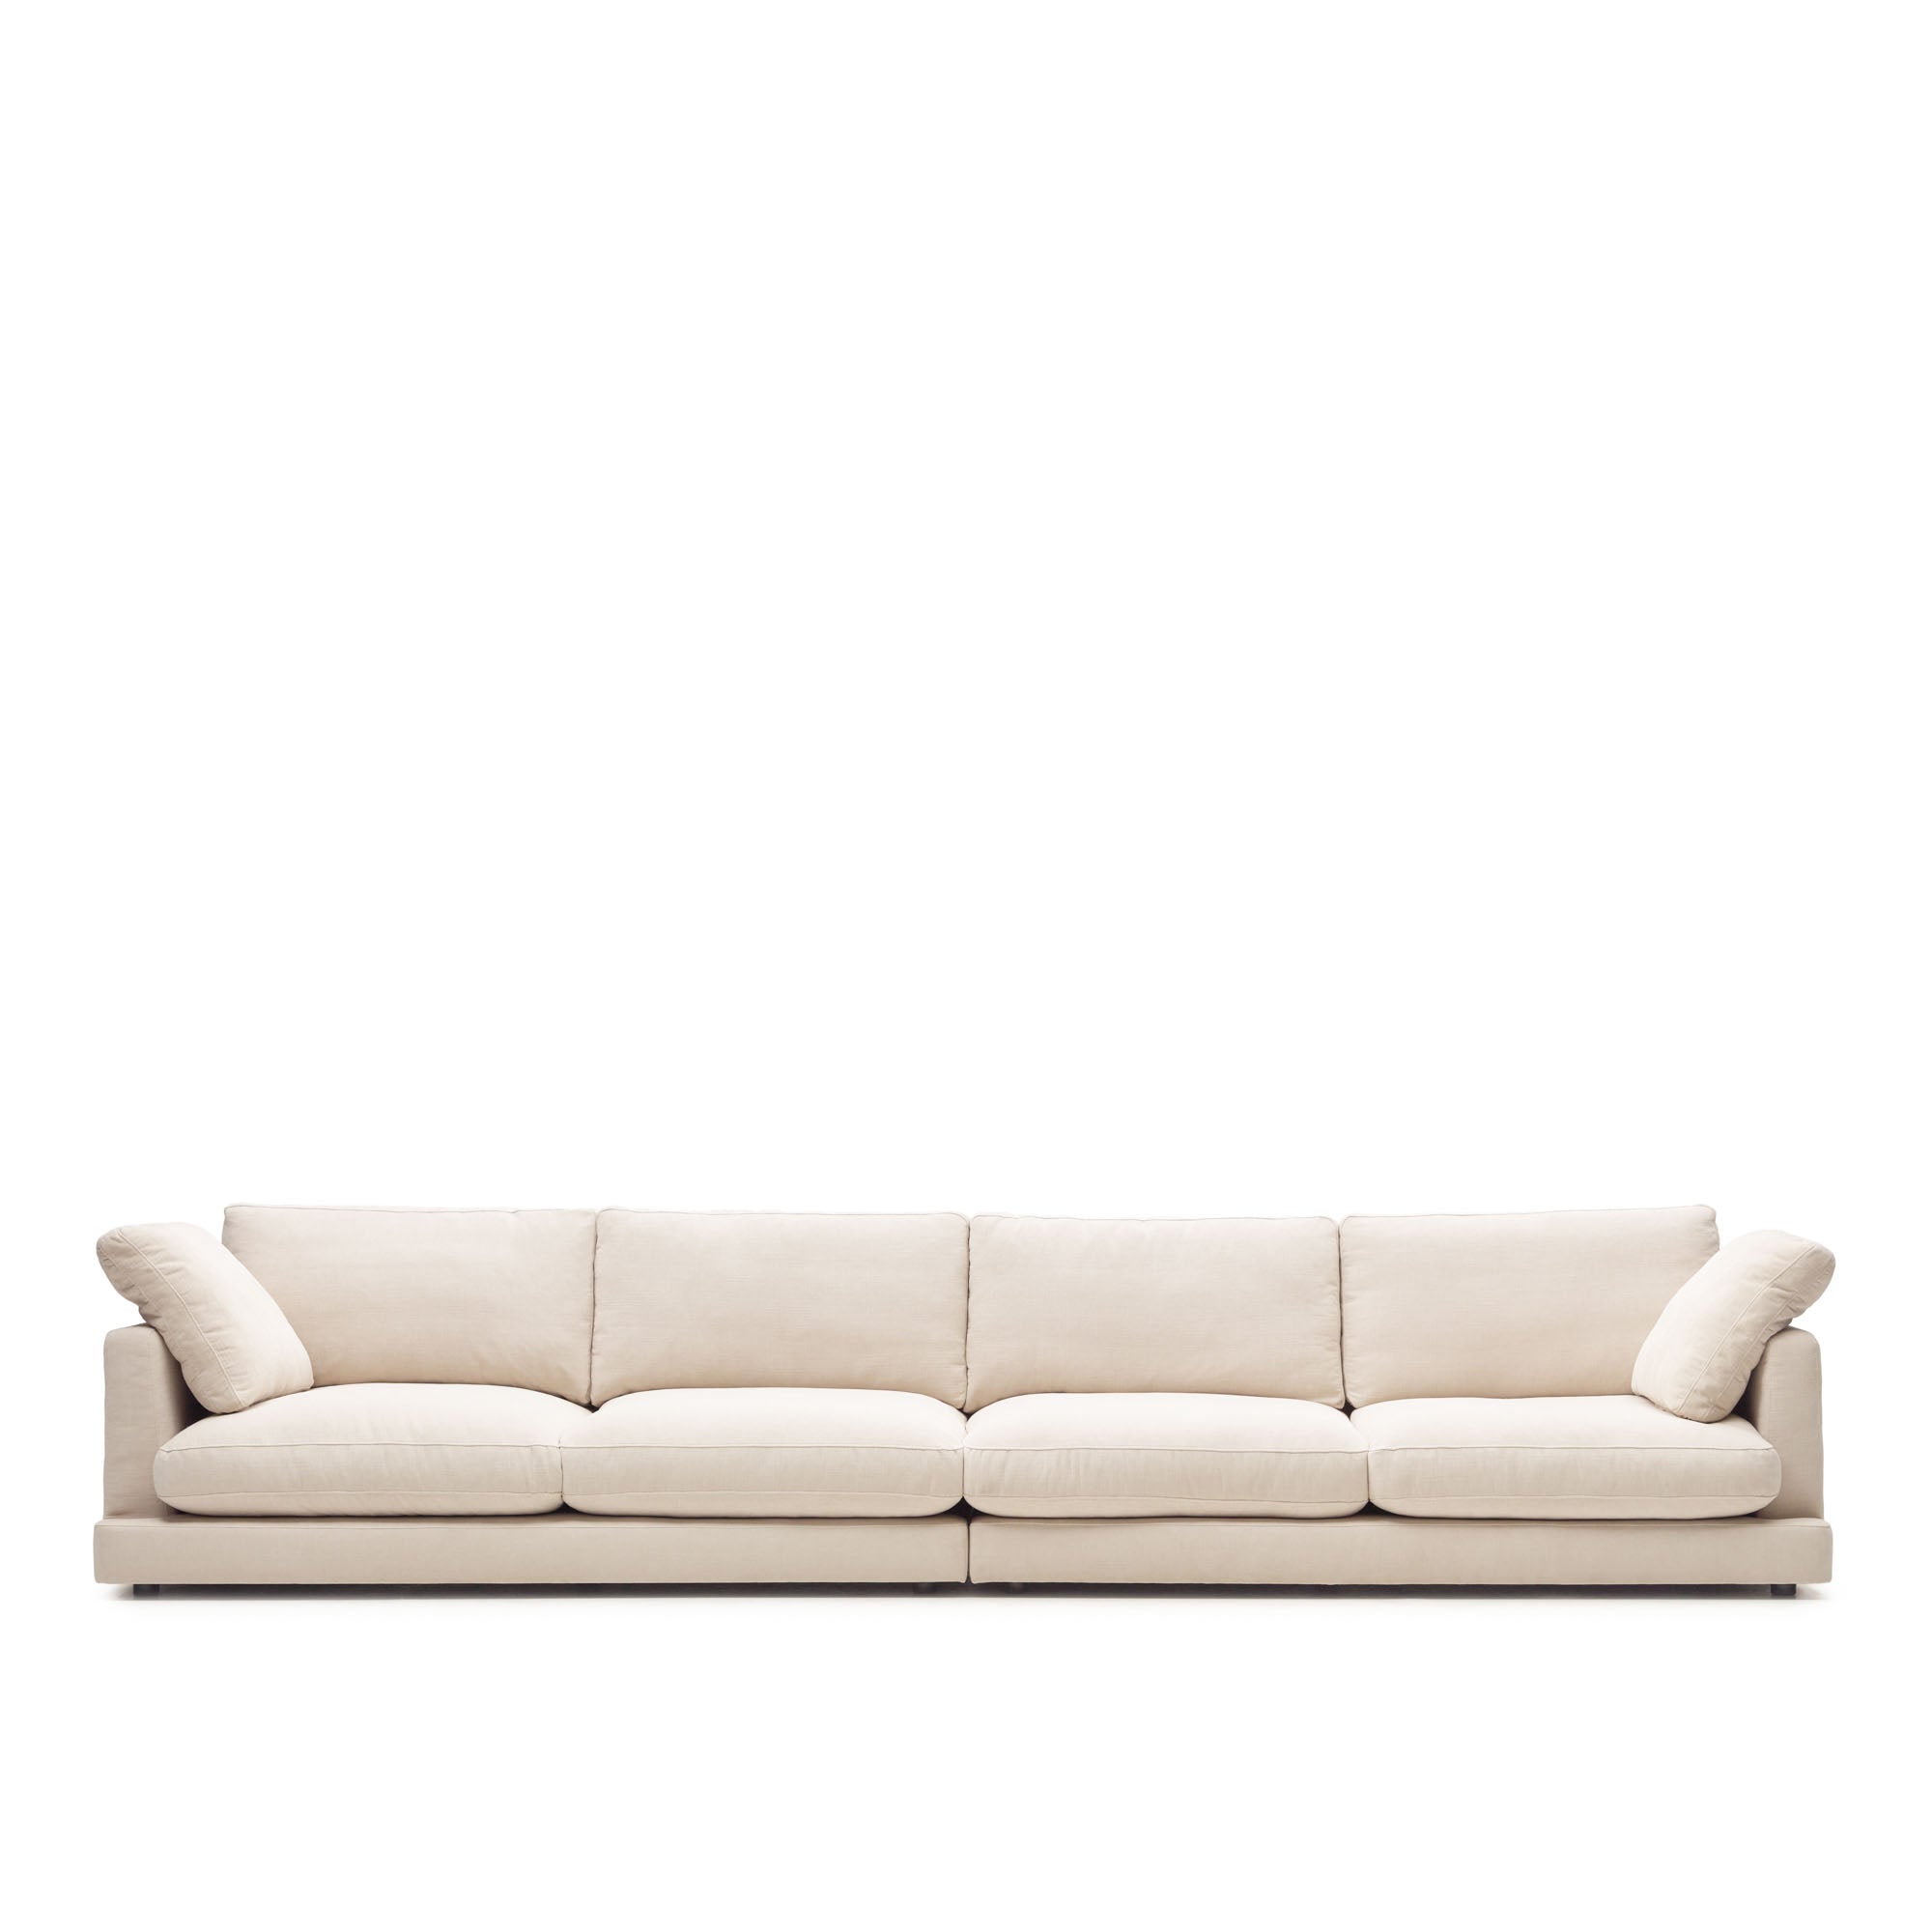 Gala 6 seater sofa in beige, 390 cm